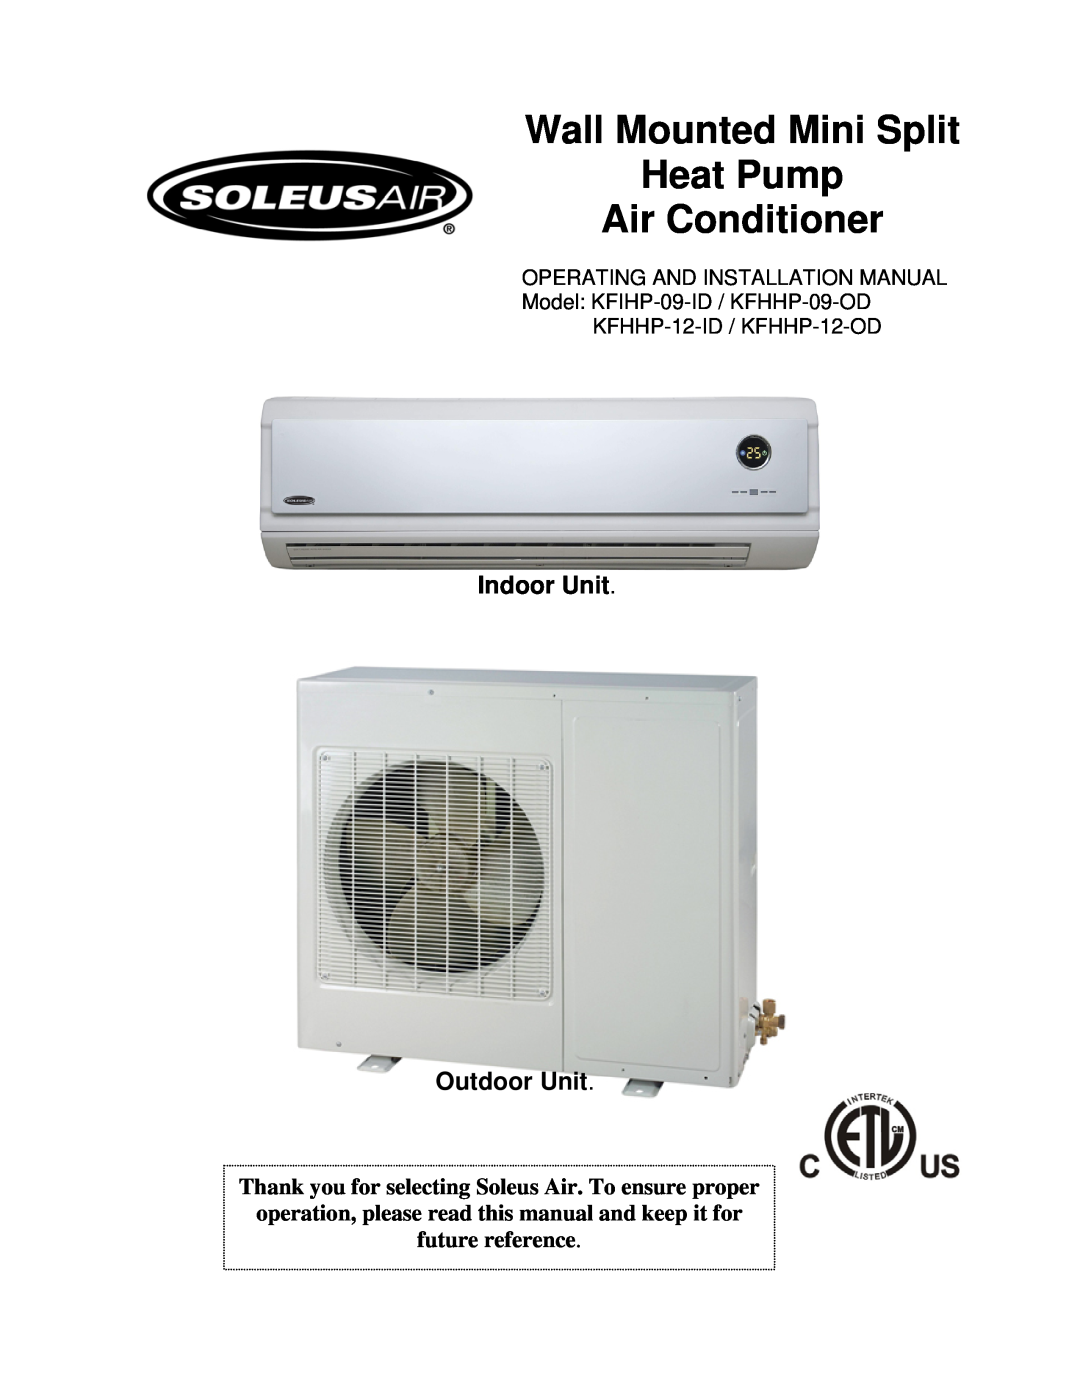 Soleus Air KFHHP-12-OD installation manual Indoor Unit Outdoor Unit, Wall Mounted Mini Split Heat Pump Air Conditioner 